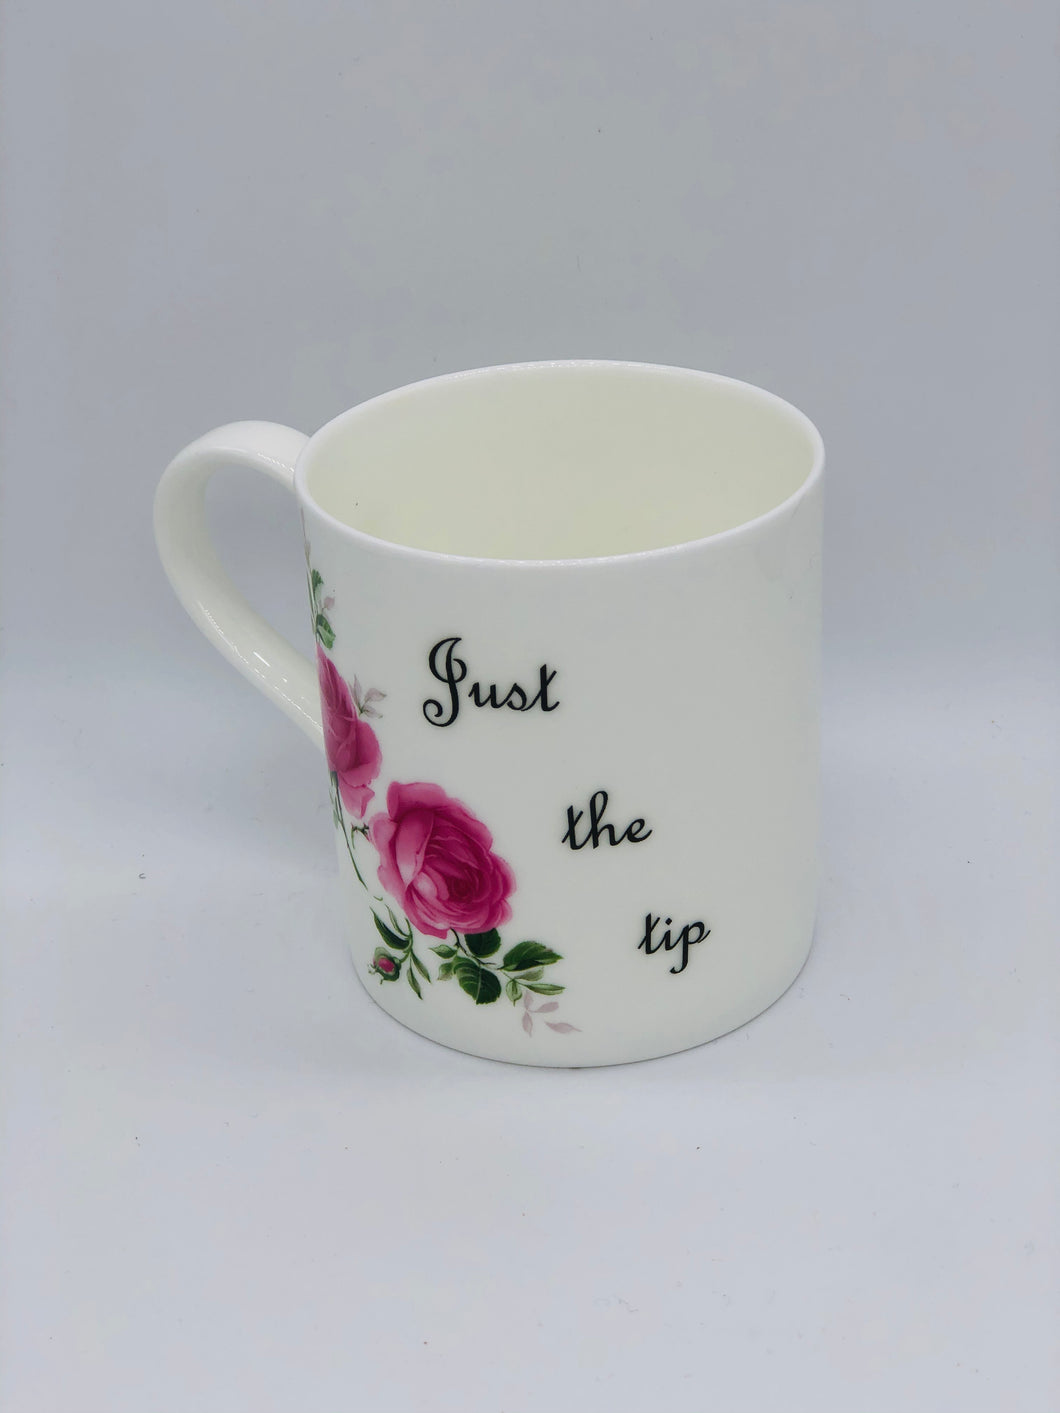 ‘Just the tip’ fine bone china mug